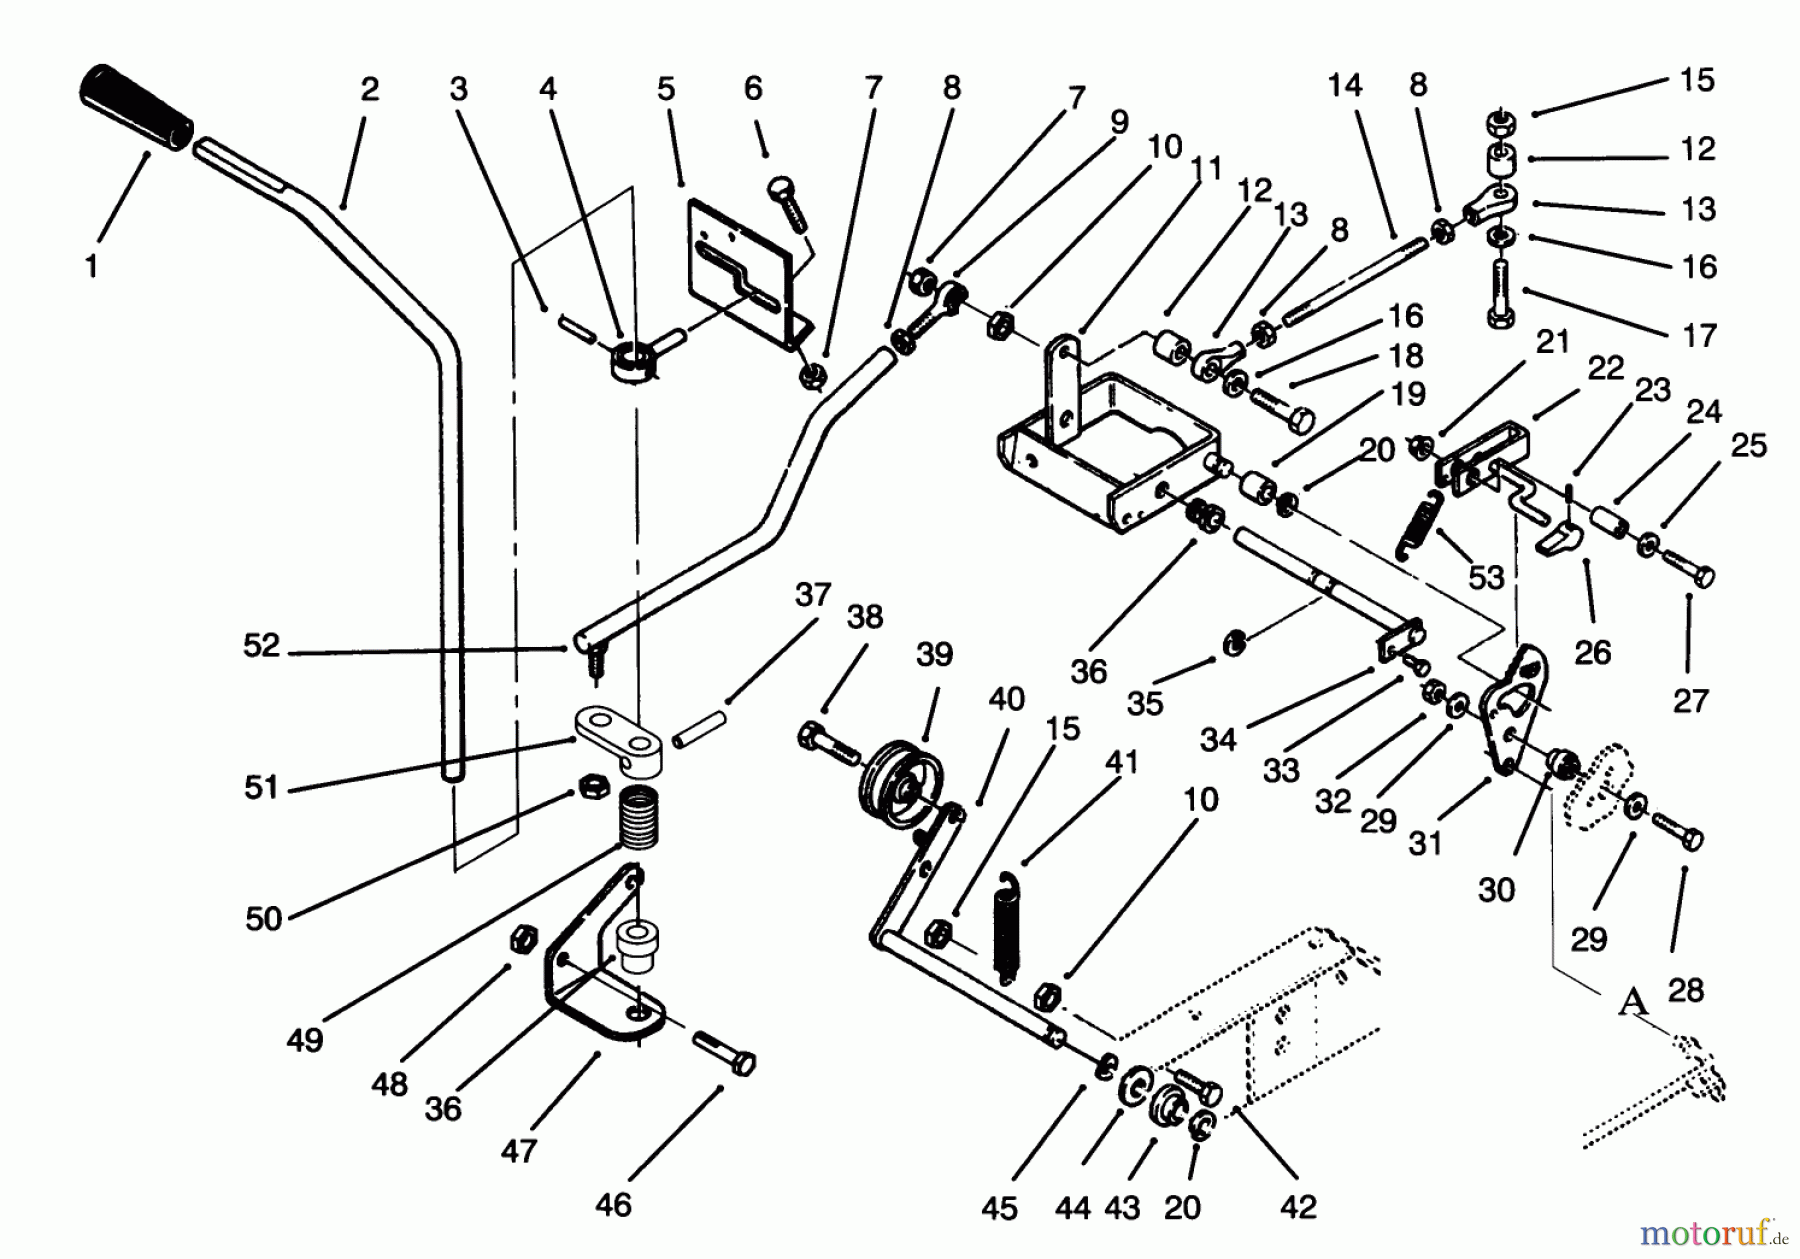  Toro Neu Mowers, Lawn & Garden Tractor Seite 1 73501 (520-H) - Toro 520-H Garden Tractor, 1994 (49000001-49999999) CLUTCH, BRAKE AND MOTION CONTROL LINKAGE